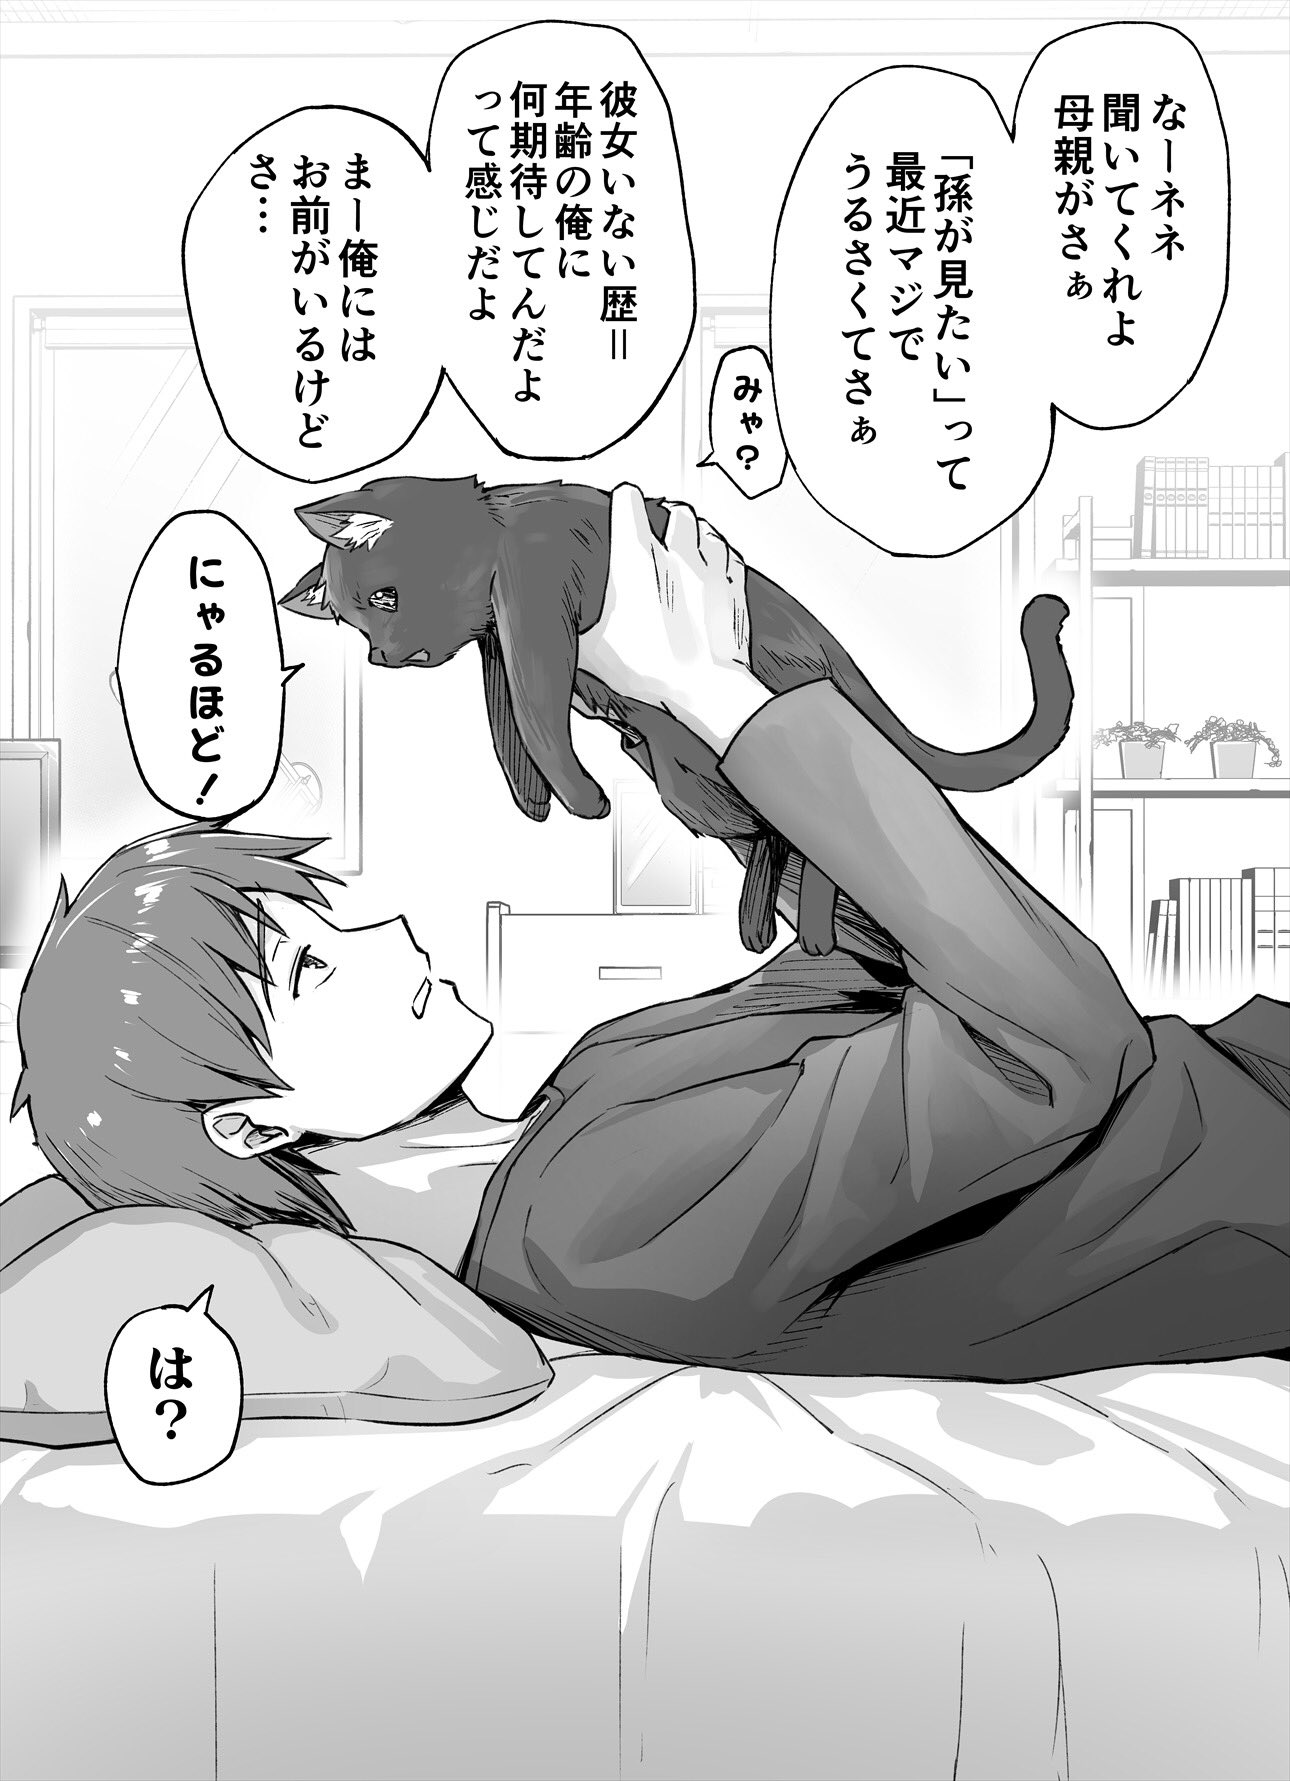 The Yandere Pet Cat Is Overly Domineering manga